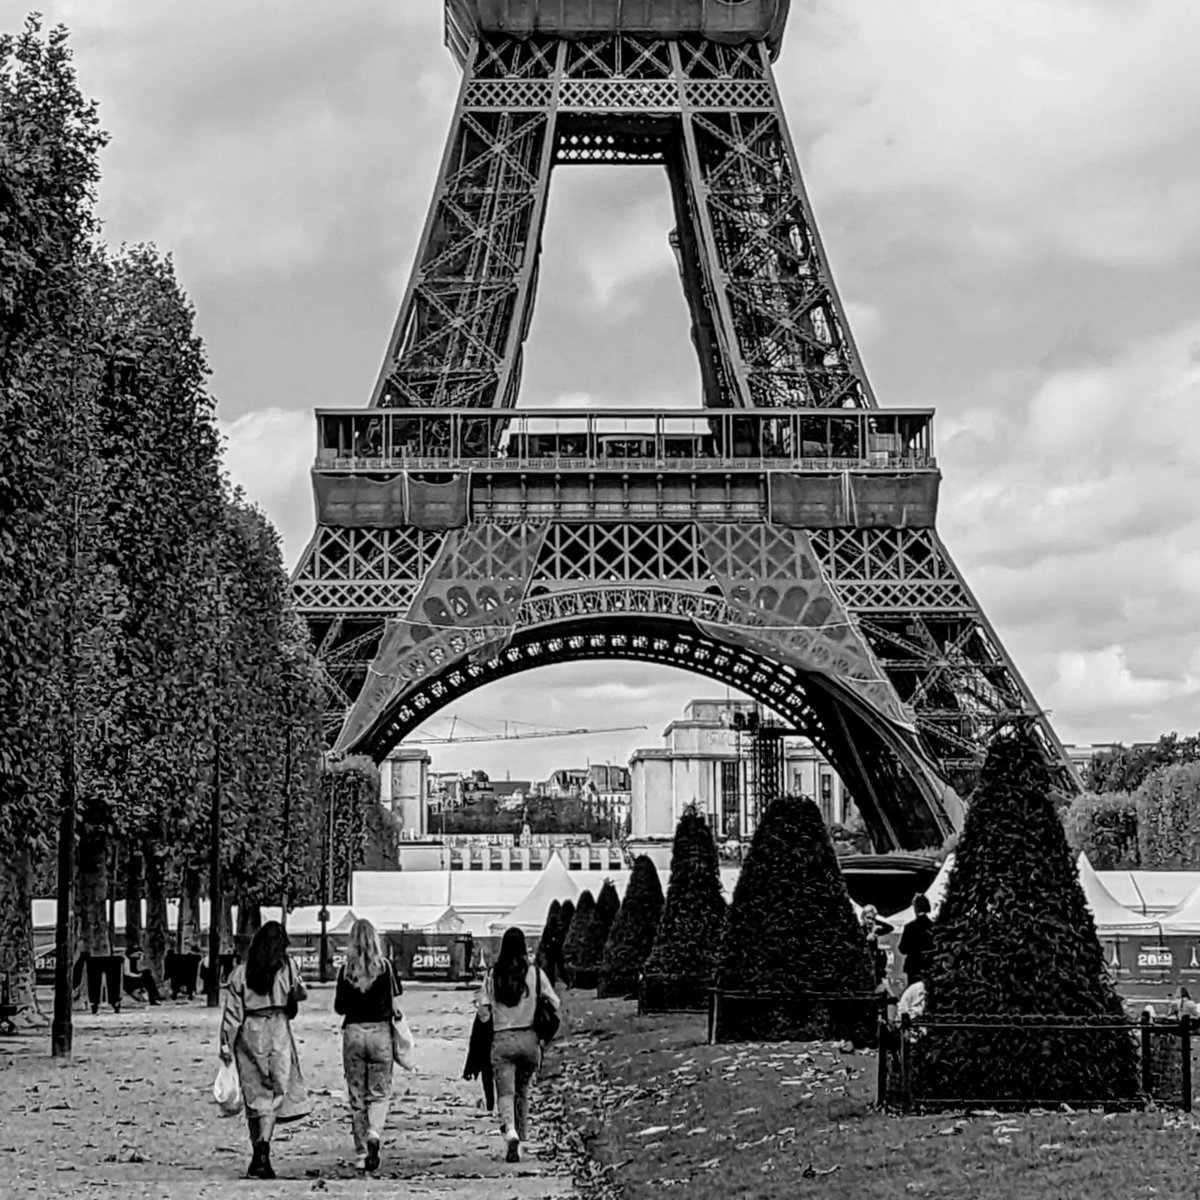 The three graces.
By me. #blackandwhitephotography #BlackandwhiteWednesday #streetphoto #eiffeltower #Paris